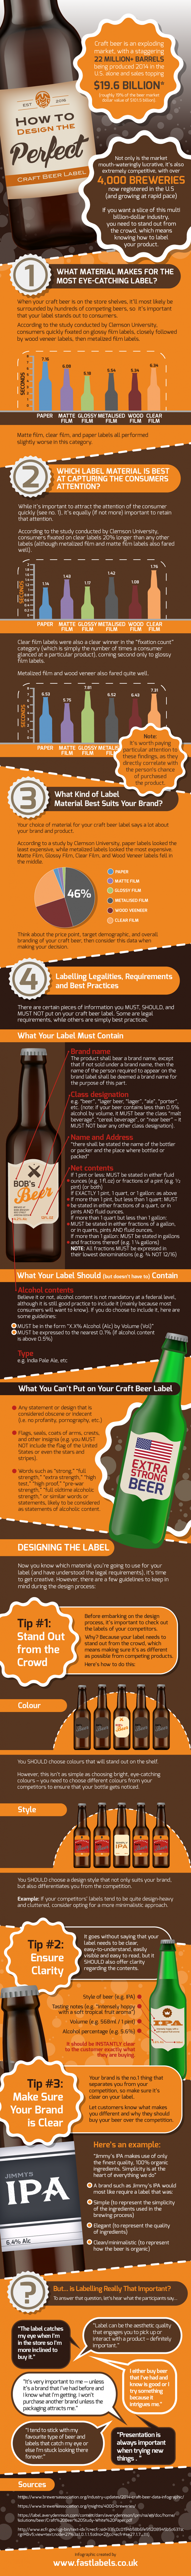 Beer Label Infographic